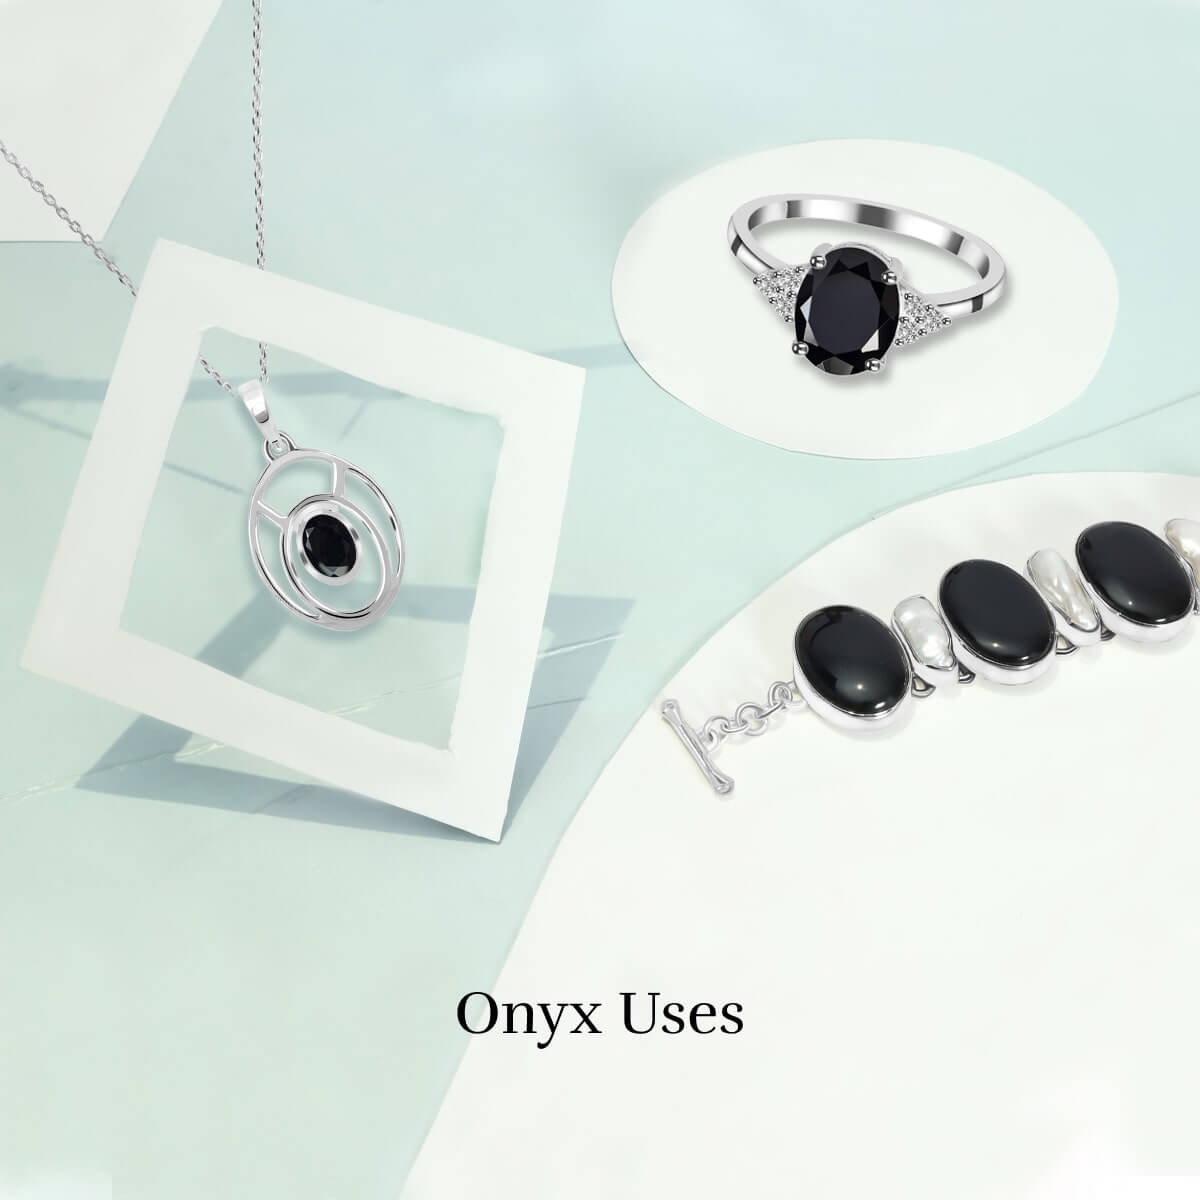 Uses of onyx